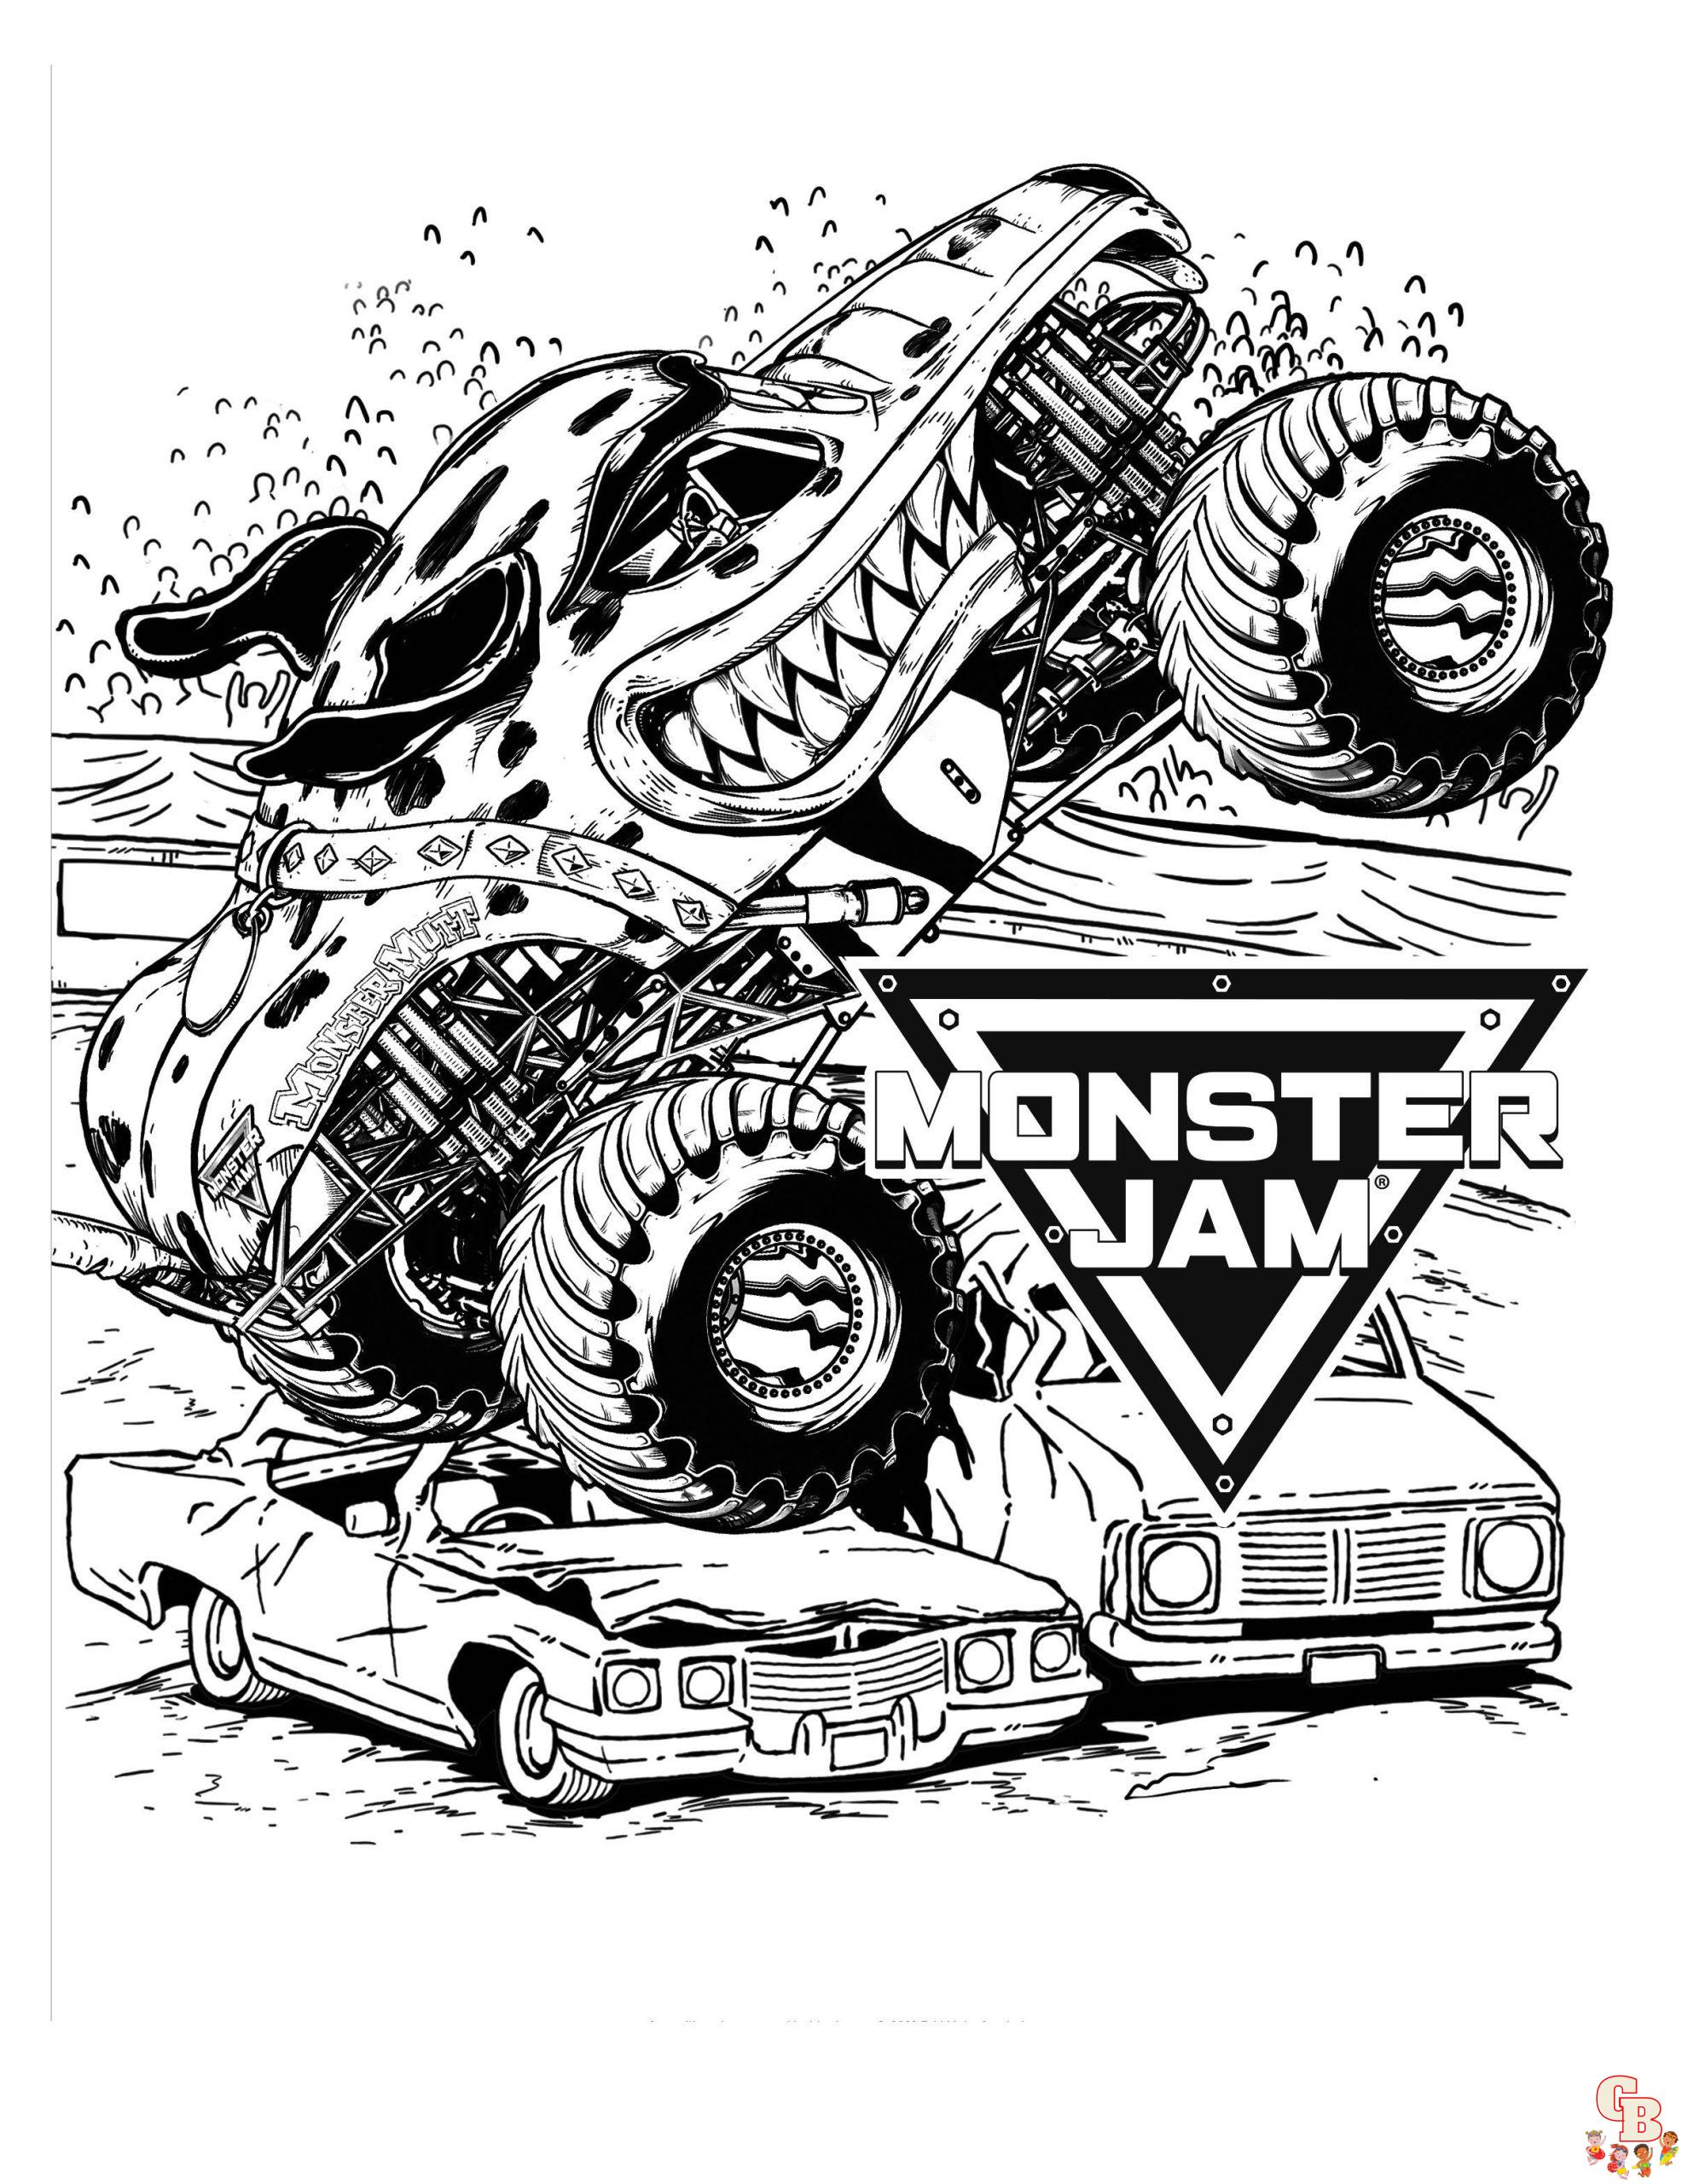 Desenho de Grave Digger Monster Truck para colorir